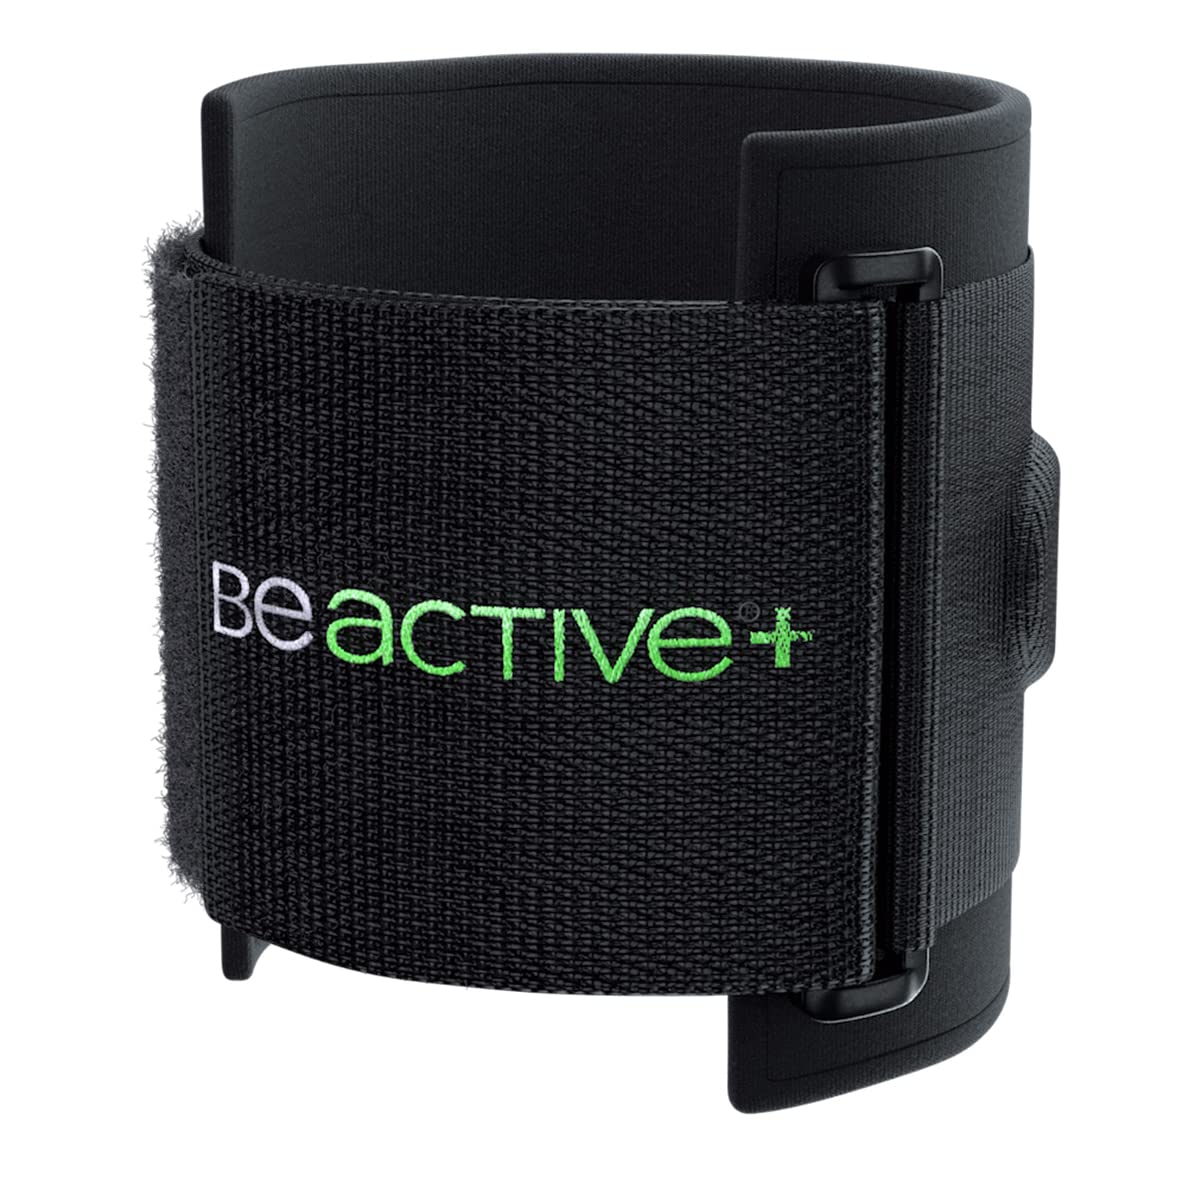 BeActive Plus Instant Relief Acupressure Calf Brace for Sciatic Nerve Pain, Black - image 1 of 6